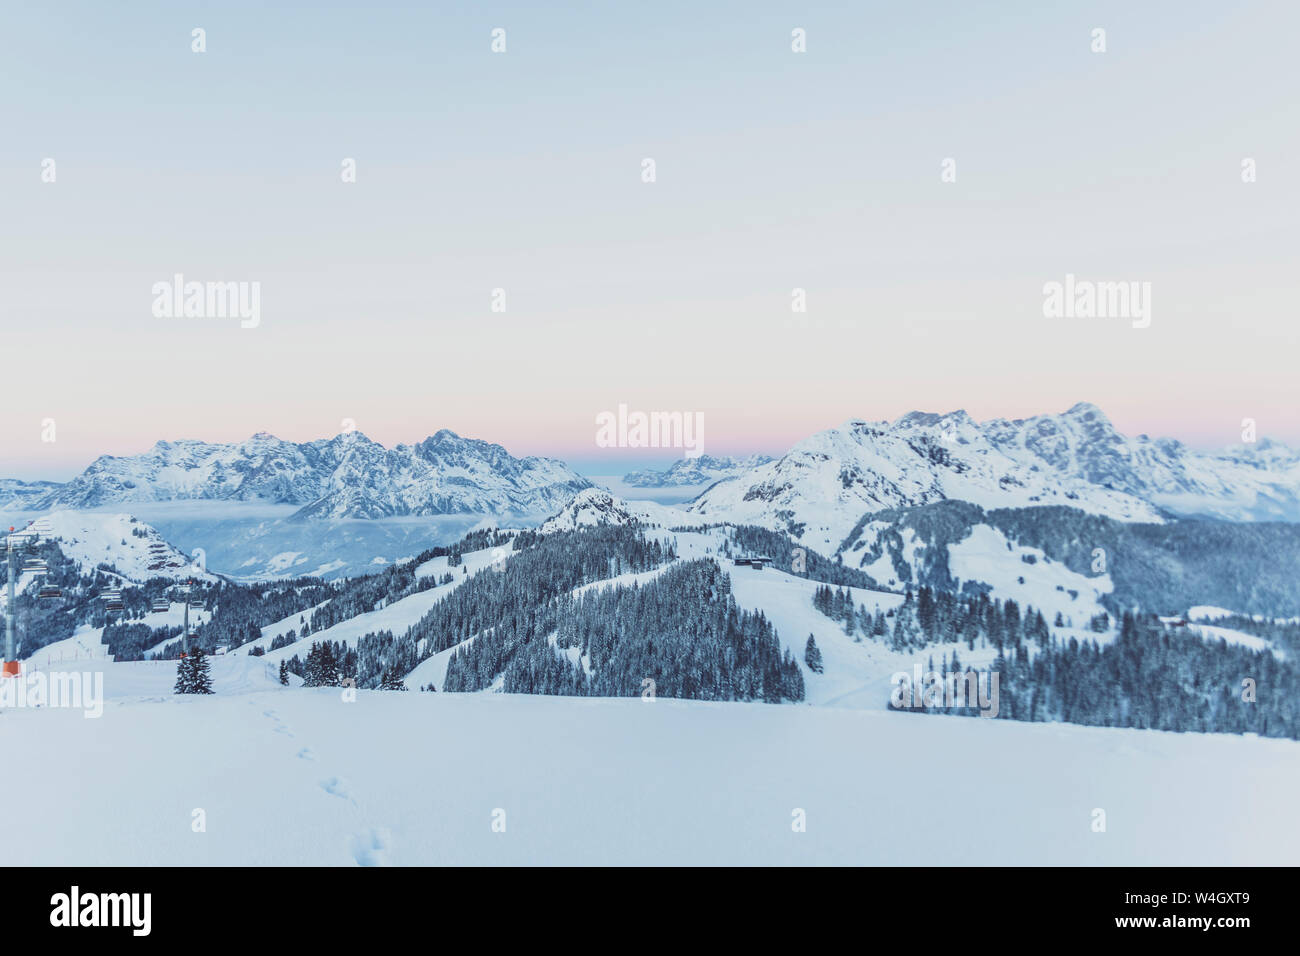 View over snowy mountains at dusk, Saalbach Hinterglemm, Pinzgau, Austria Stock Photo